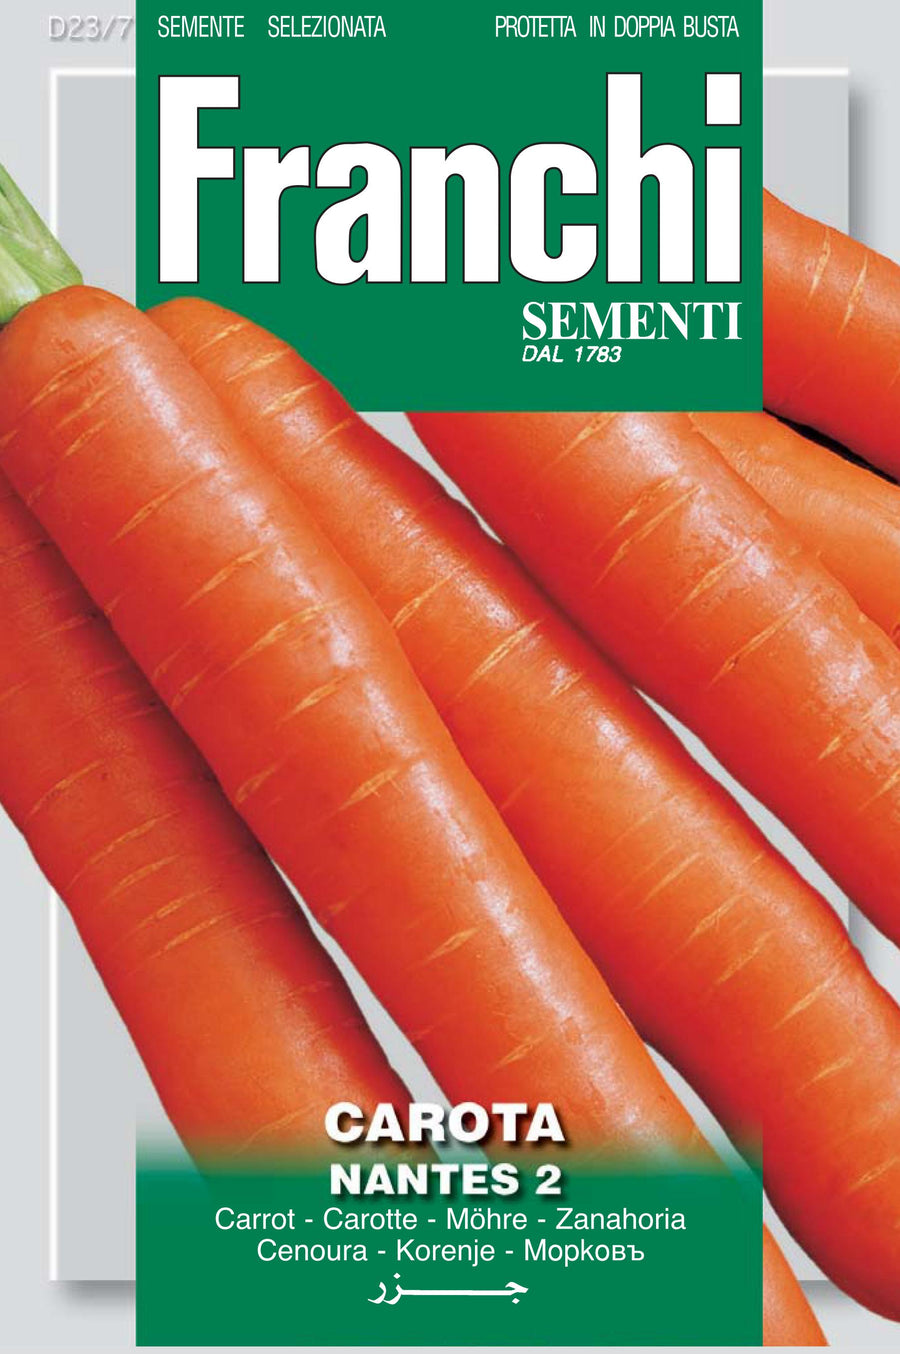 Franchi Carrot 'Nantes'